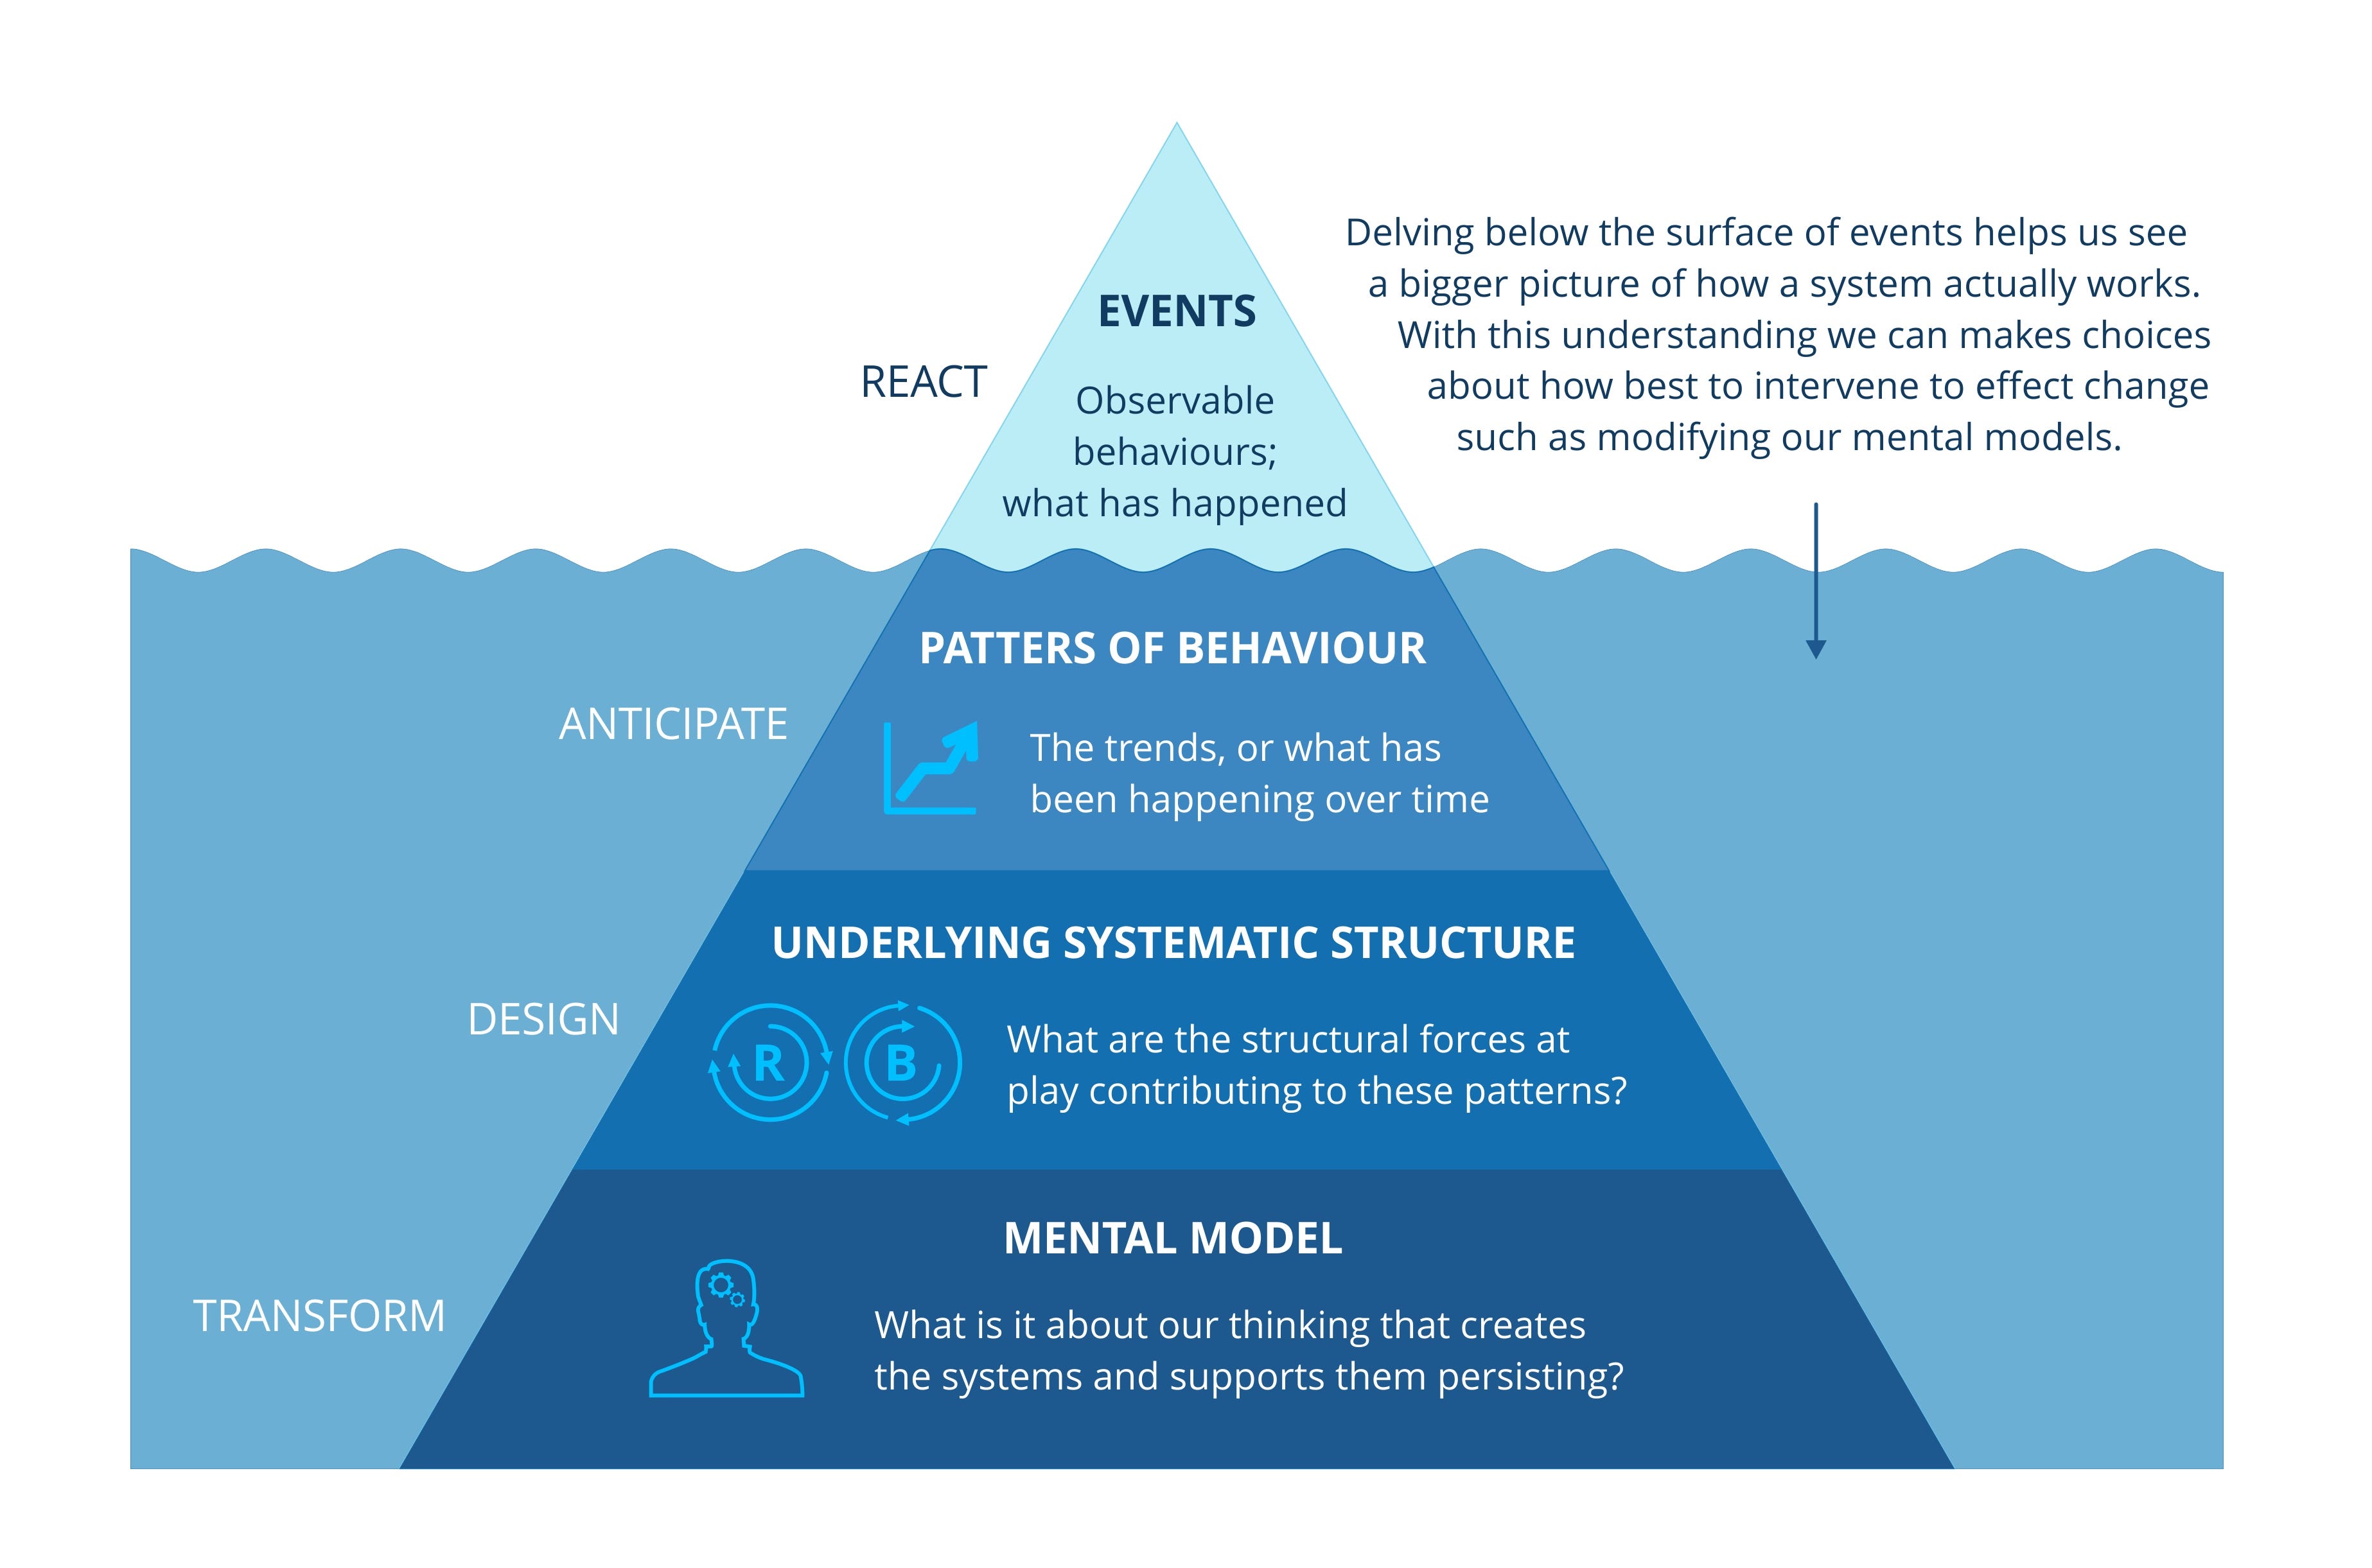 Freud Iceberg Model